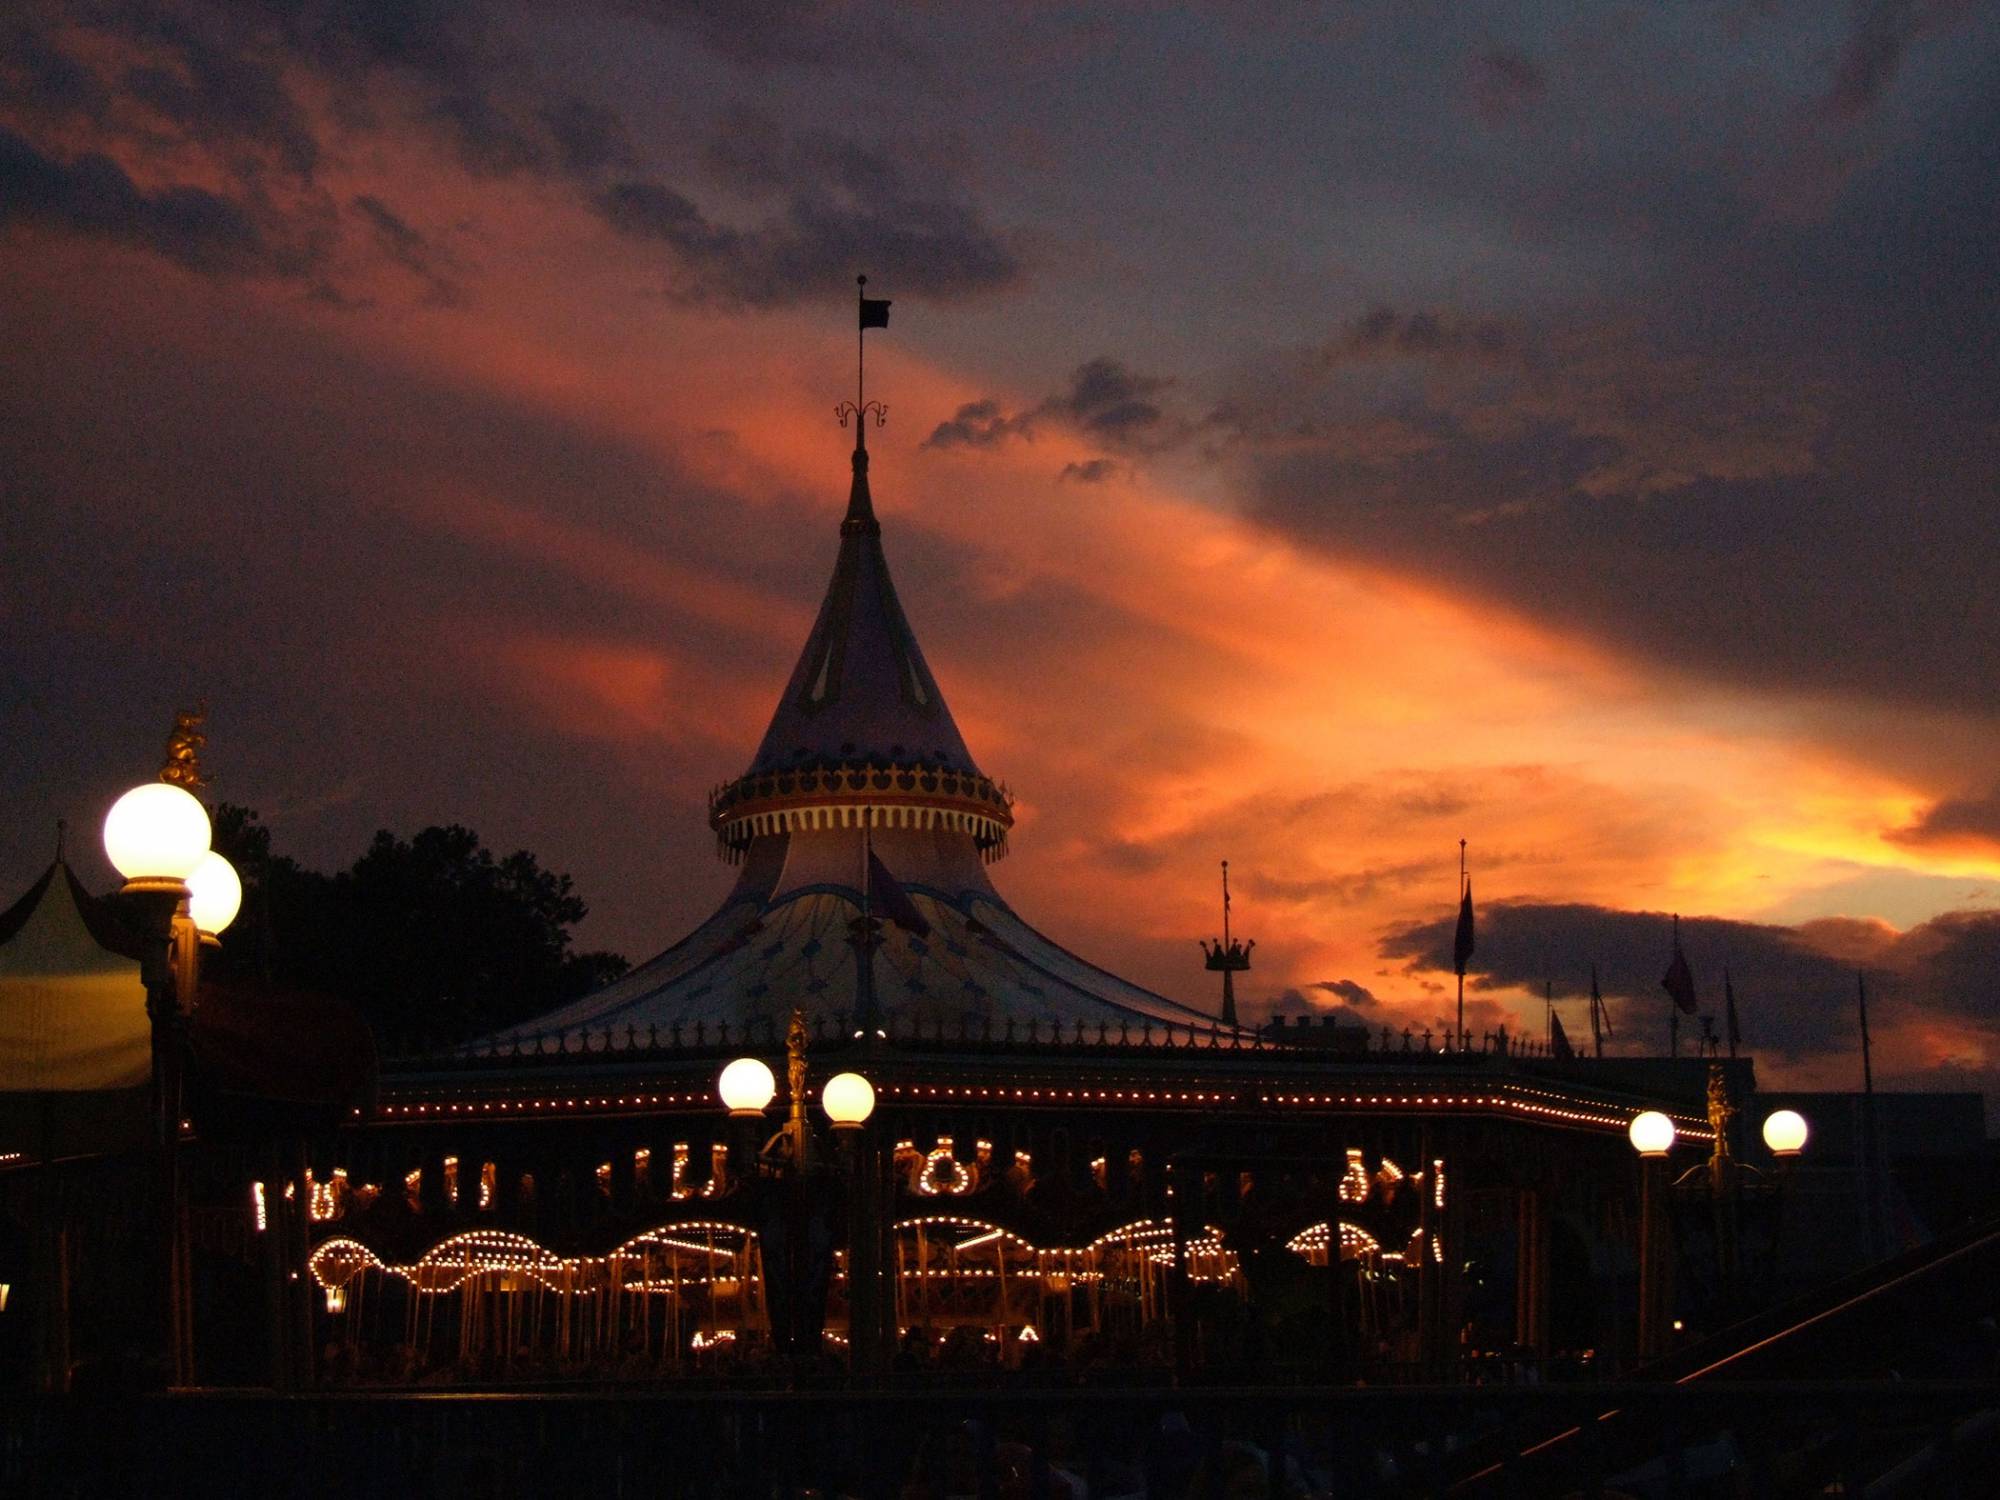 Carousel at Sunset